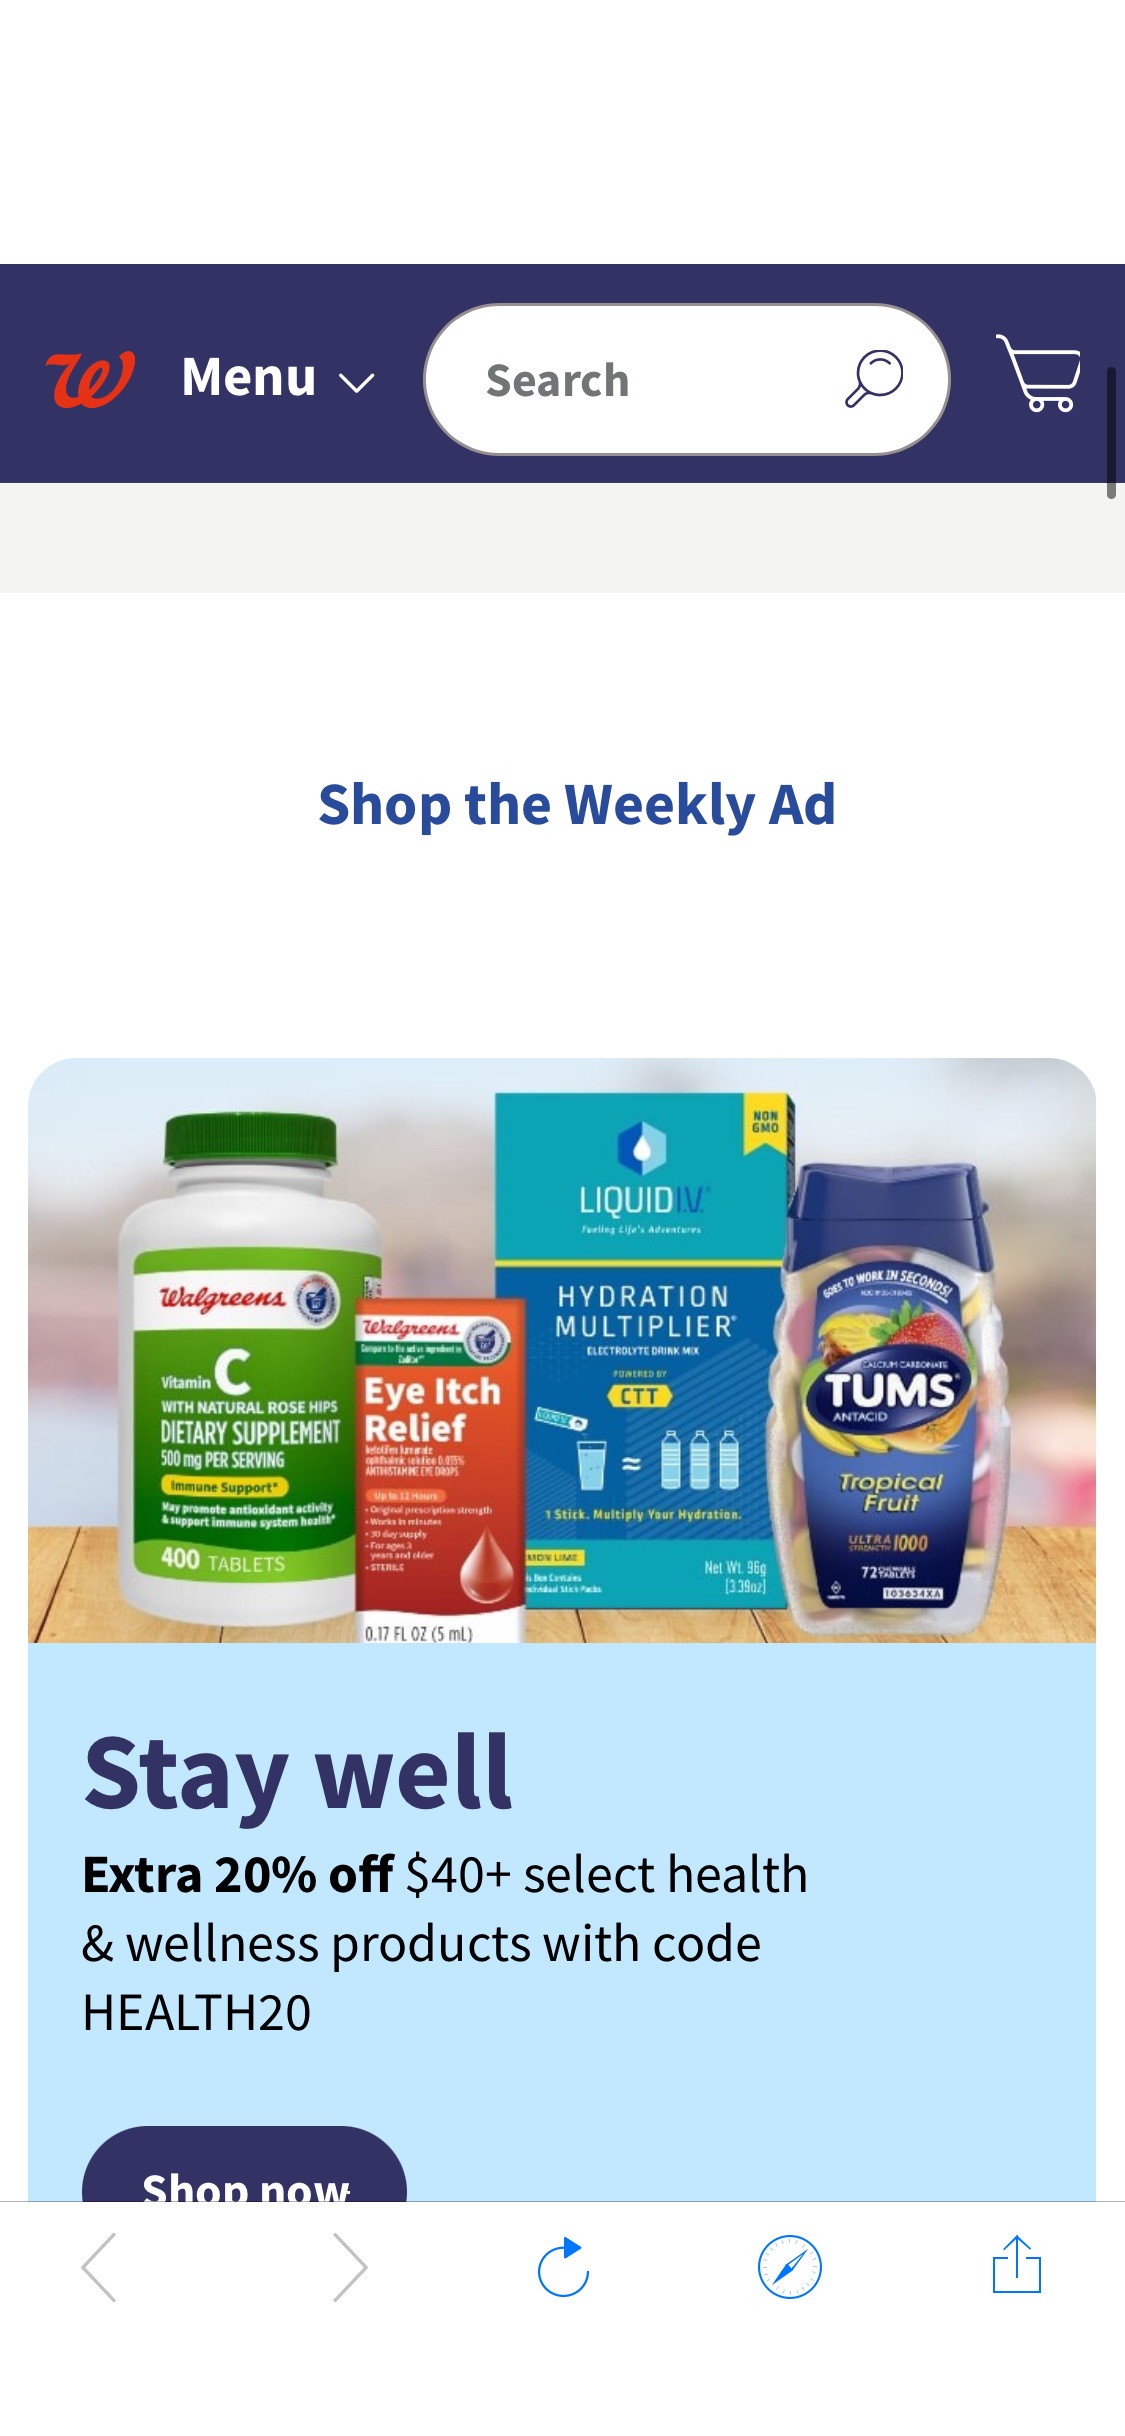 Walgreens: Pharmacy, Health & Wellness, Photo & More for You
购物满$25即返$7，还可叠加优惠券